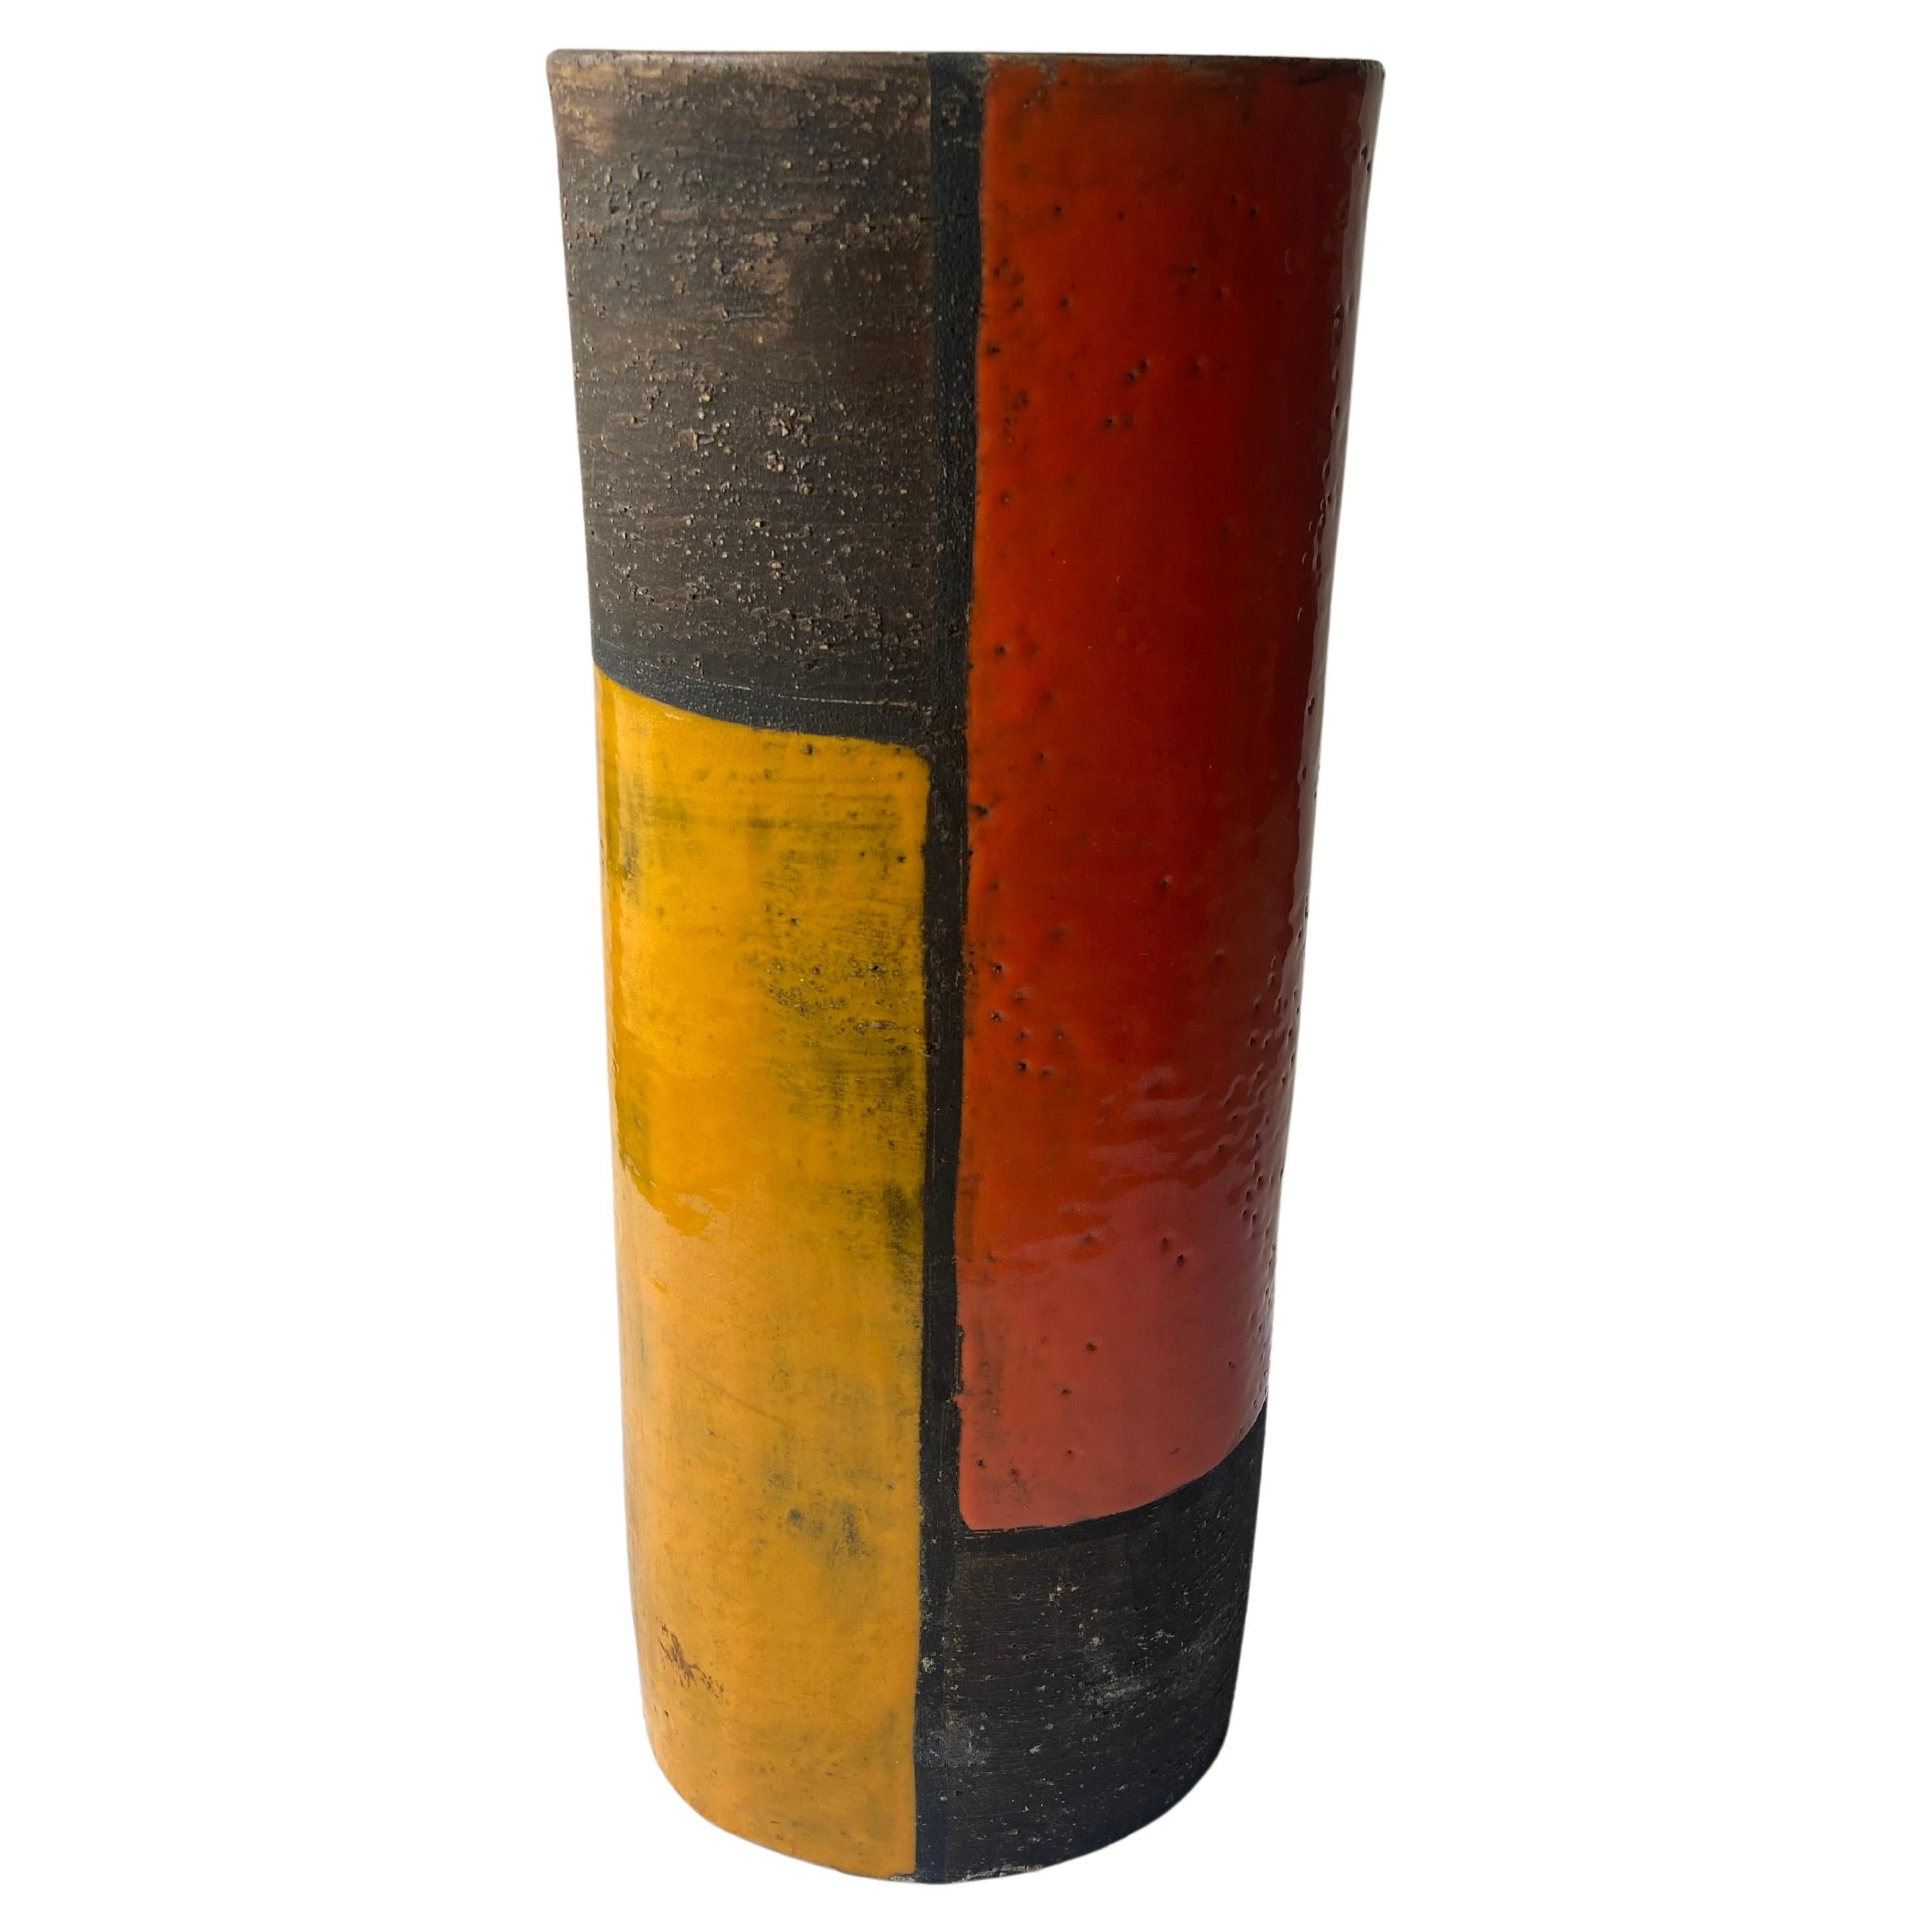 Aldo Londi, Keramik/Keramik Vase von Bitossi, Geometrisch/Mondrian Muster im Angebot